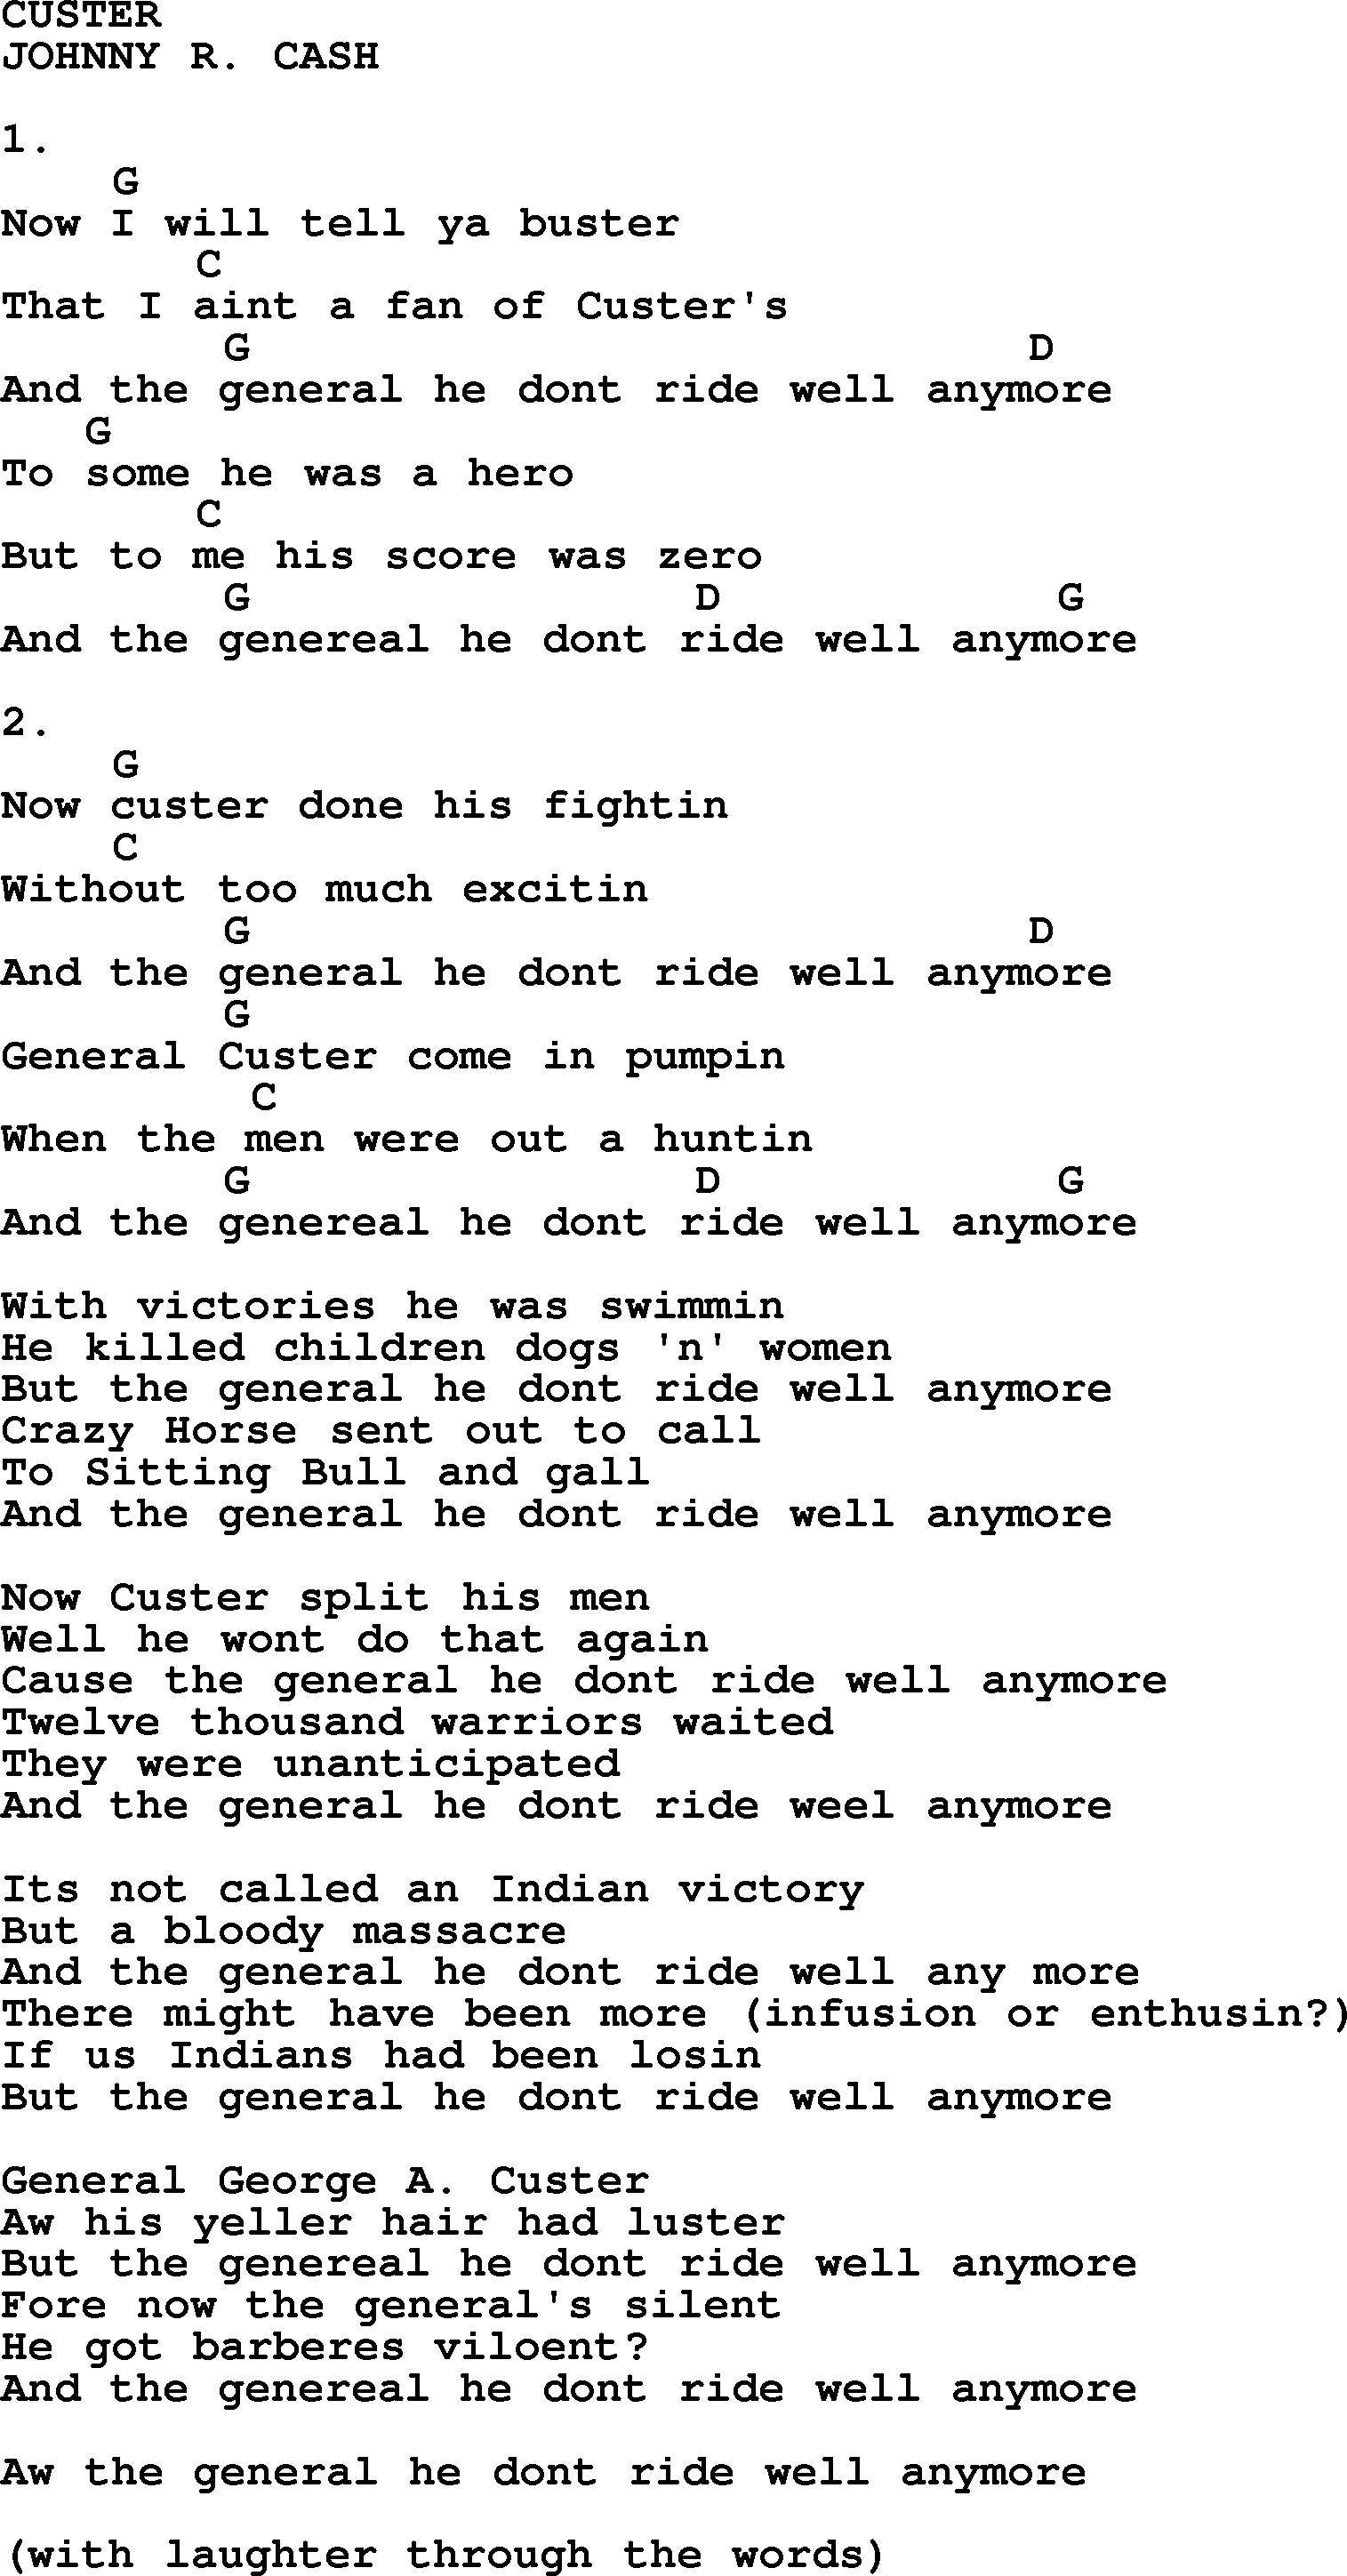 Johnny Cash song Custer, lyrics and chords